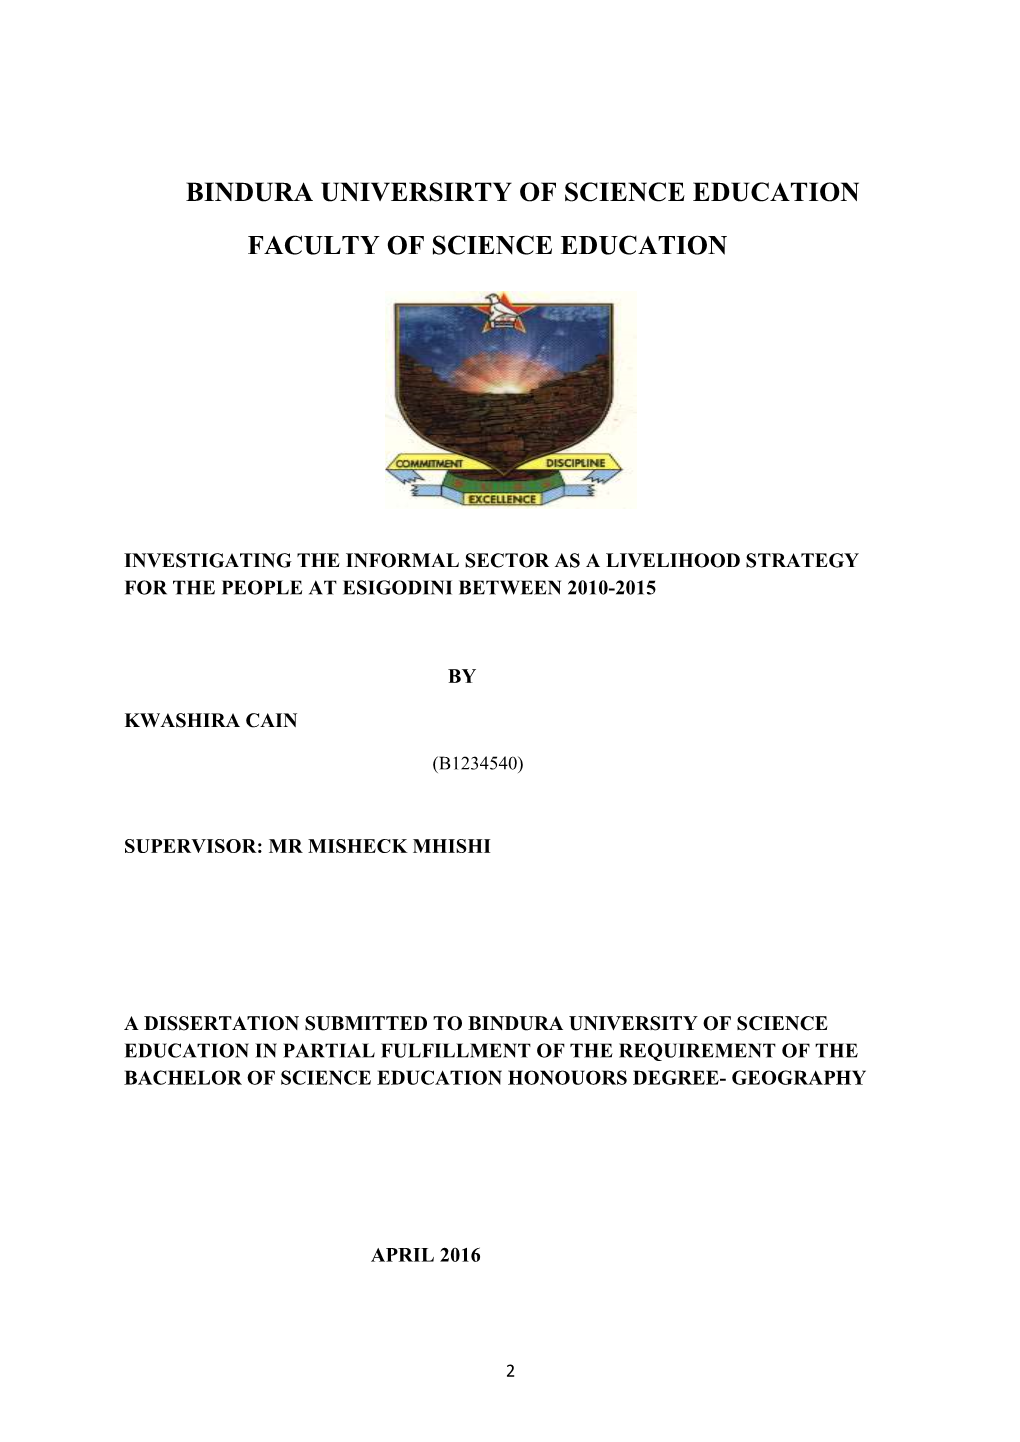 Bindura Universirty of Science Education Faculty